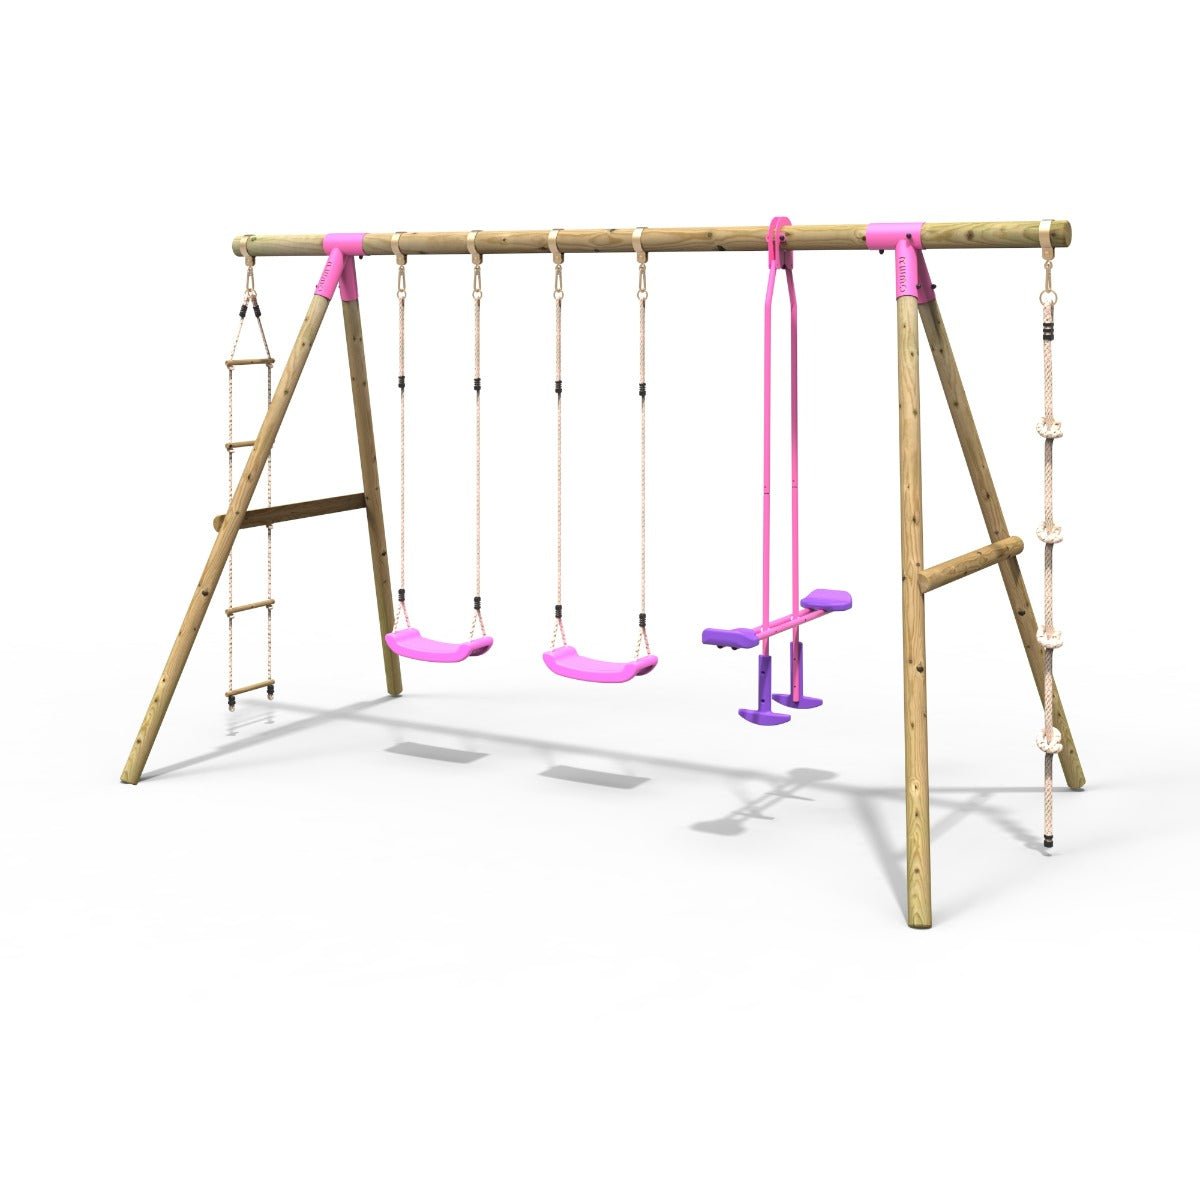 Rebo Wooden Garden Swing Sets - Saturn Pink